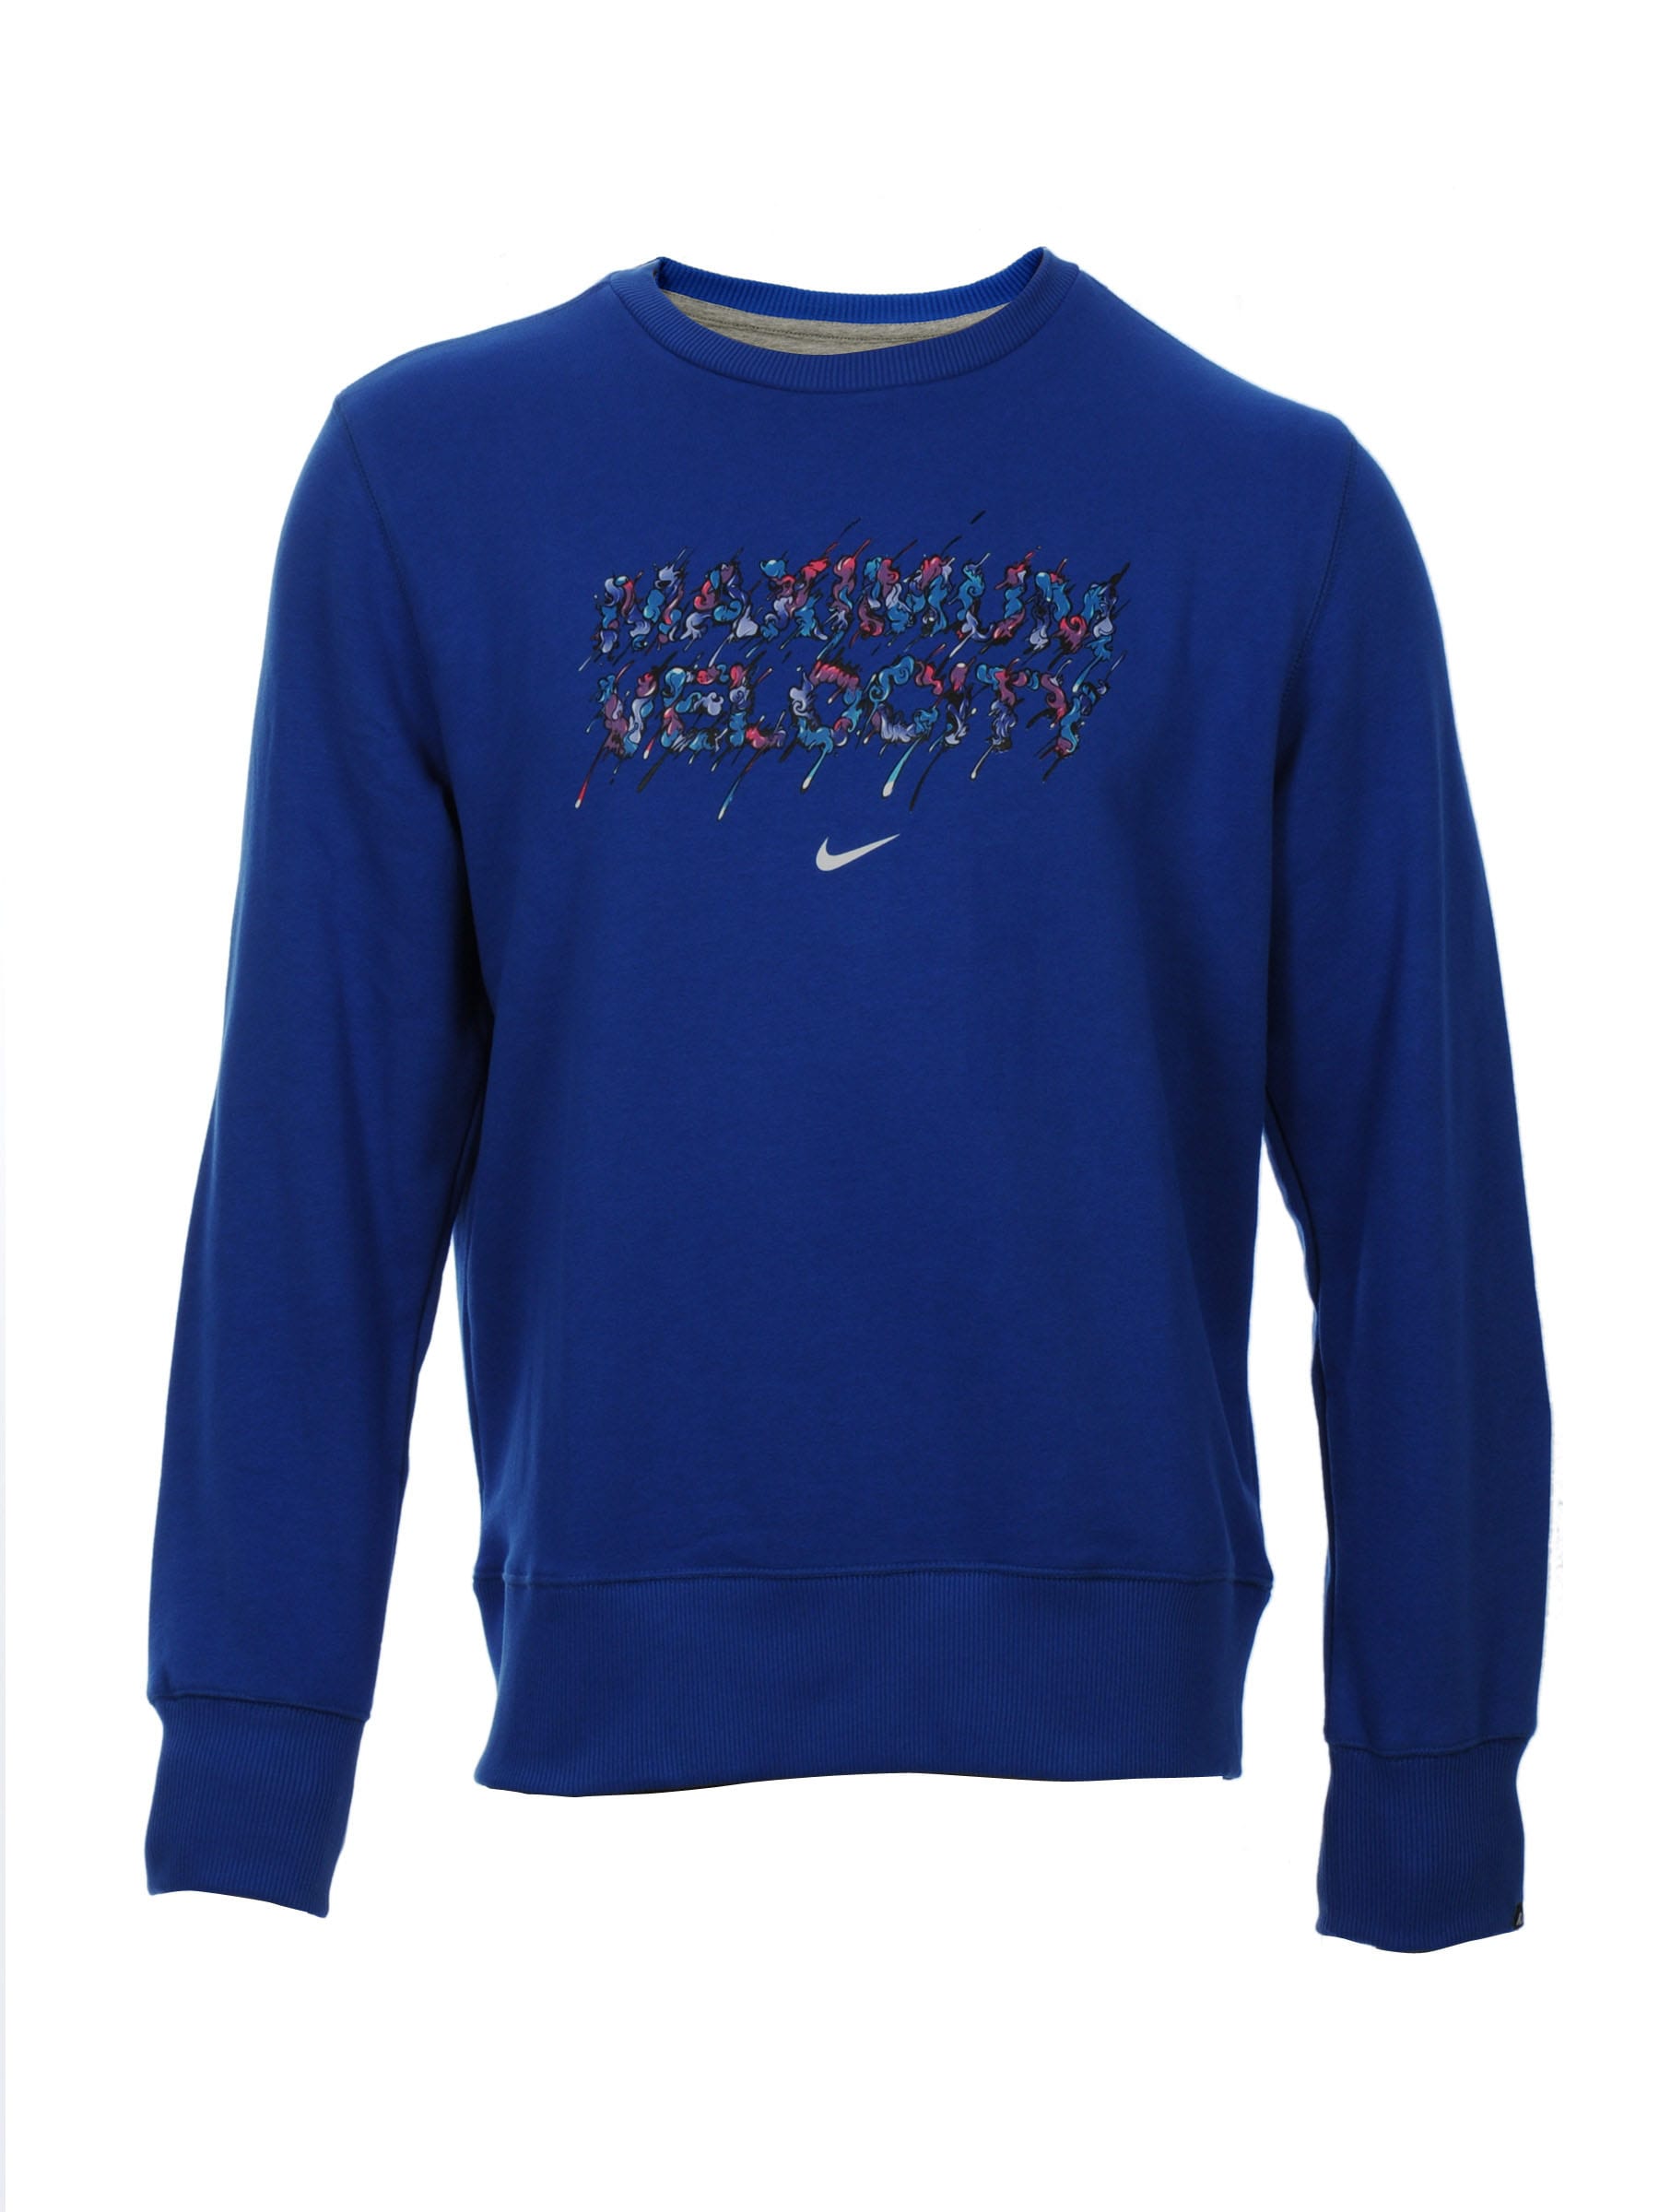 Nike Men As Squad Ft C Blue Sweatshirts